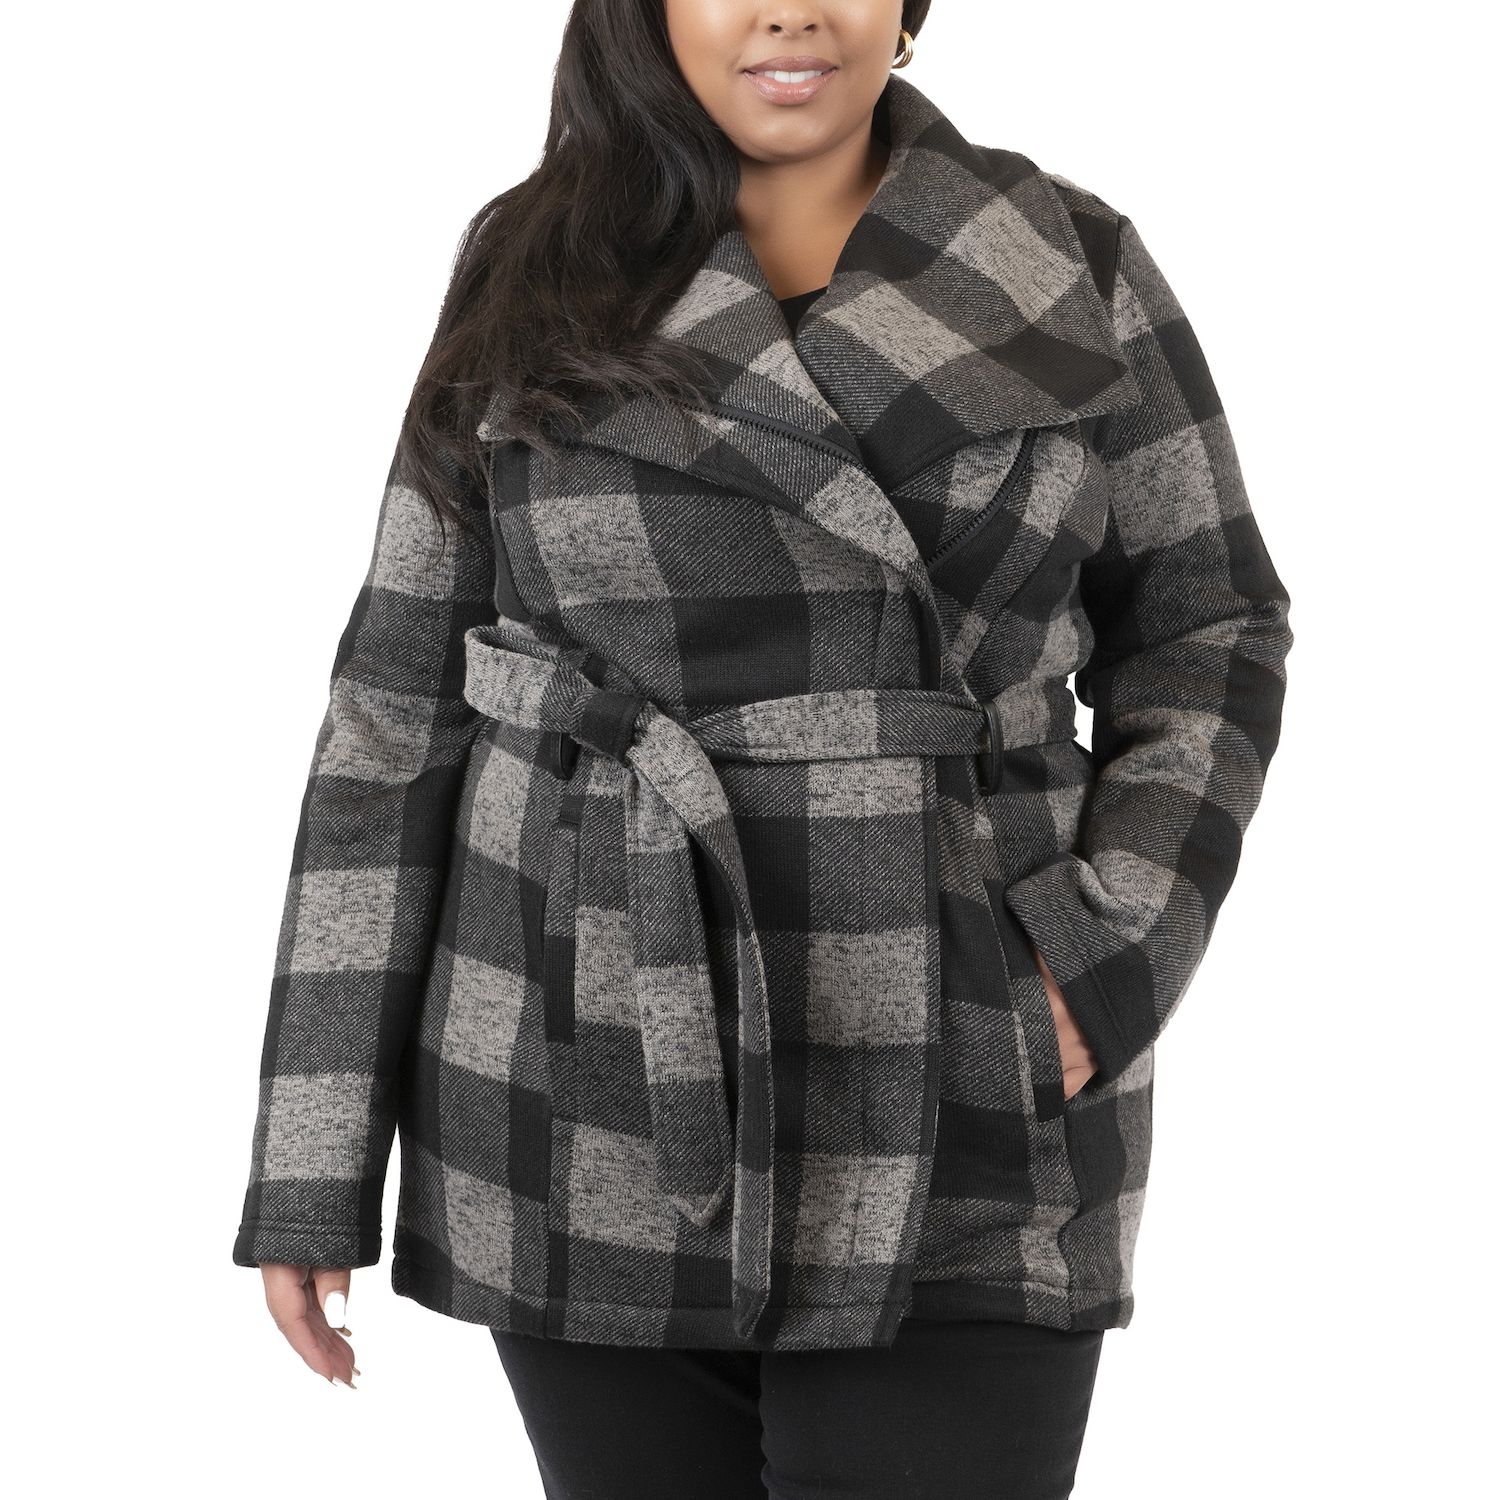 Women's Coats & Jackets - Shop Online